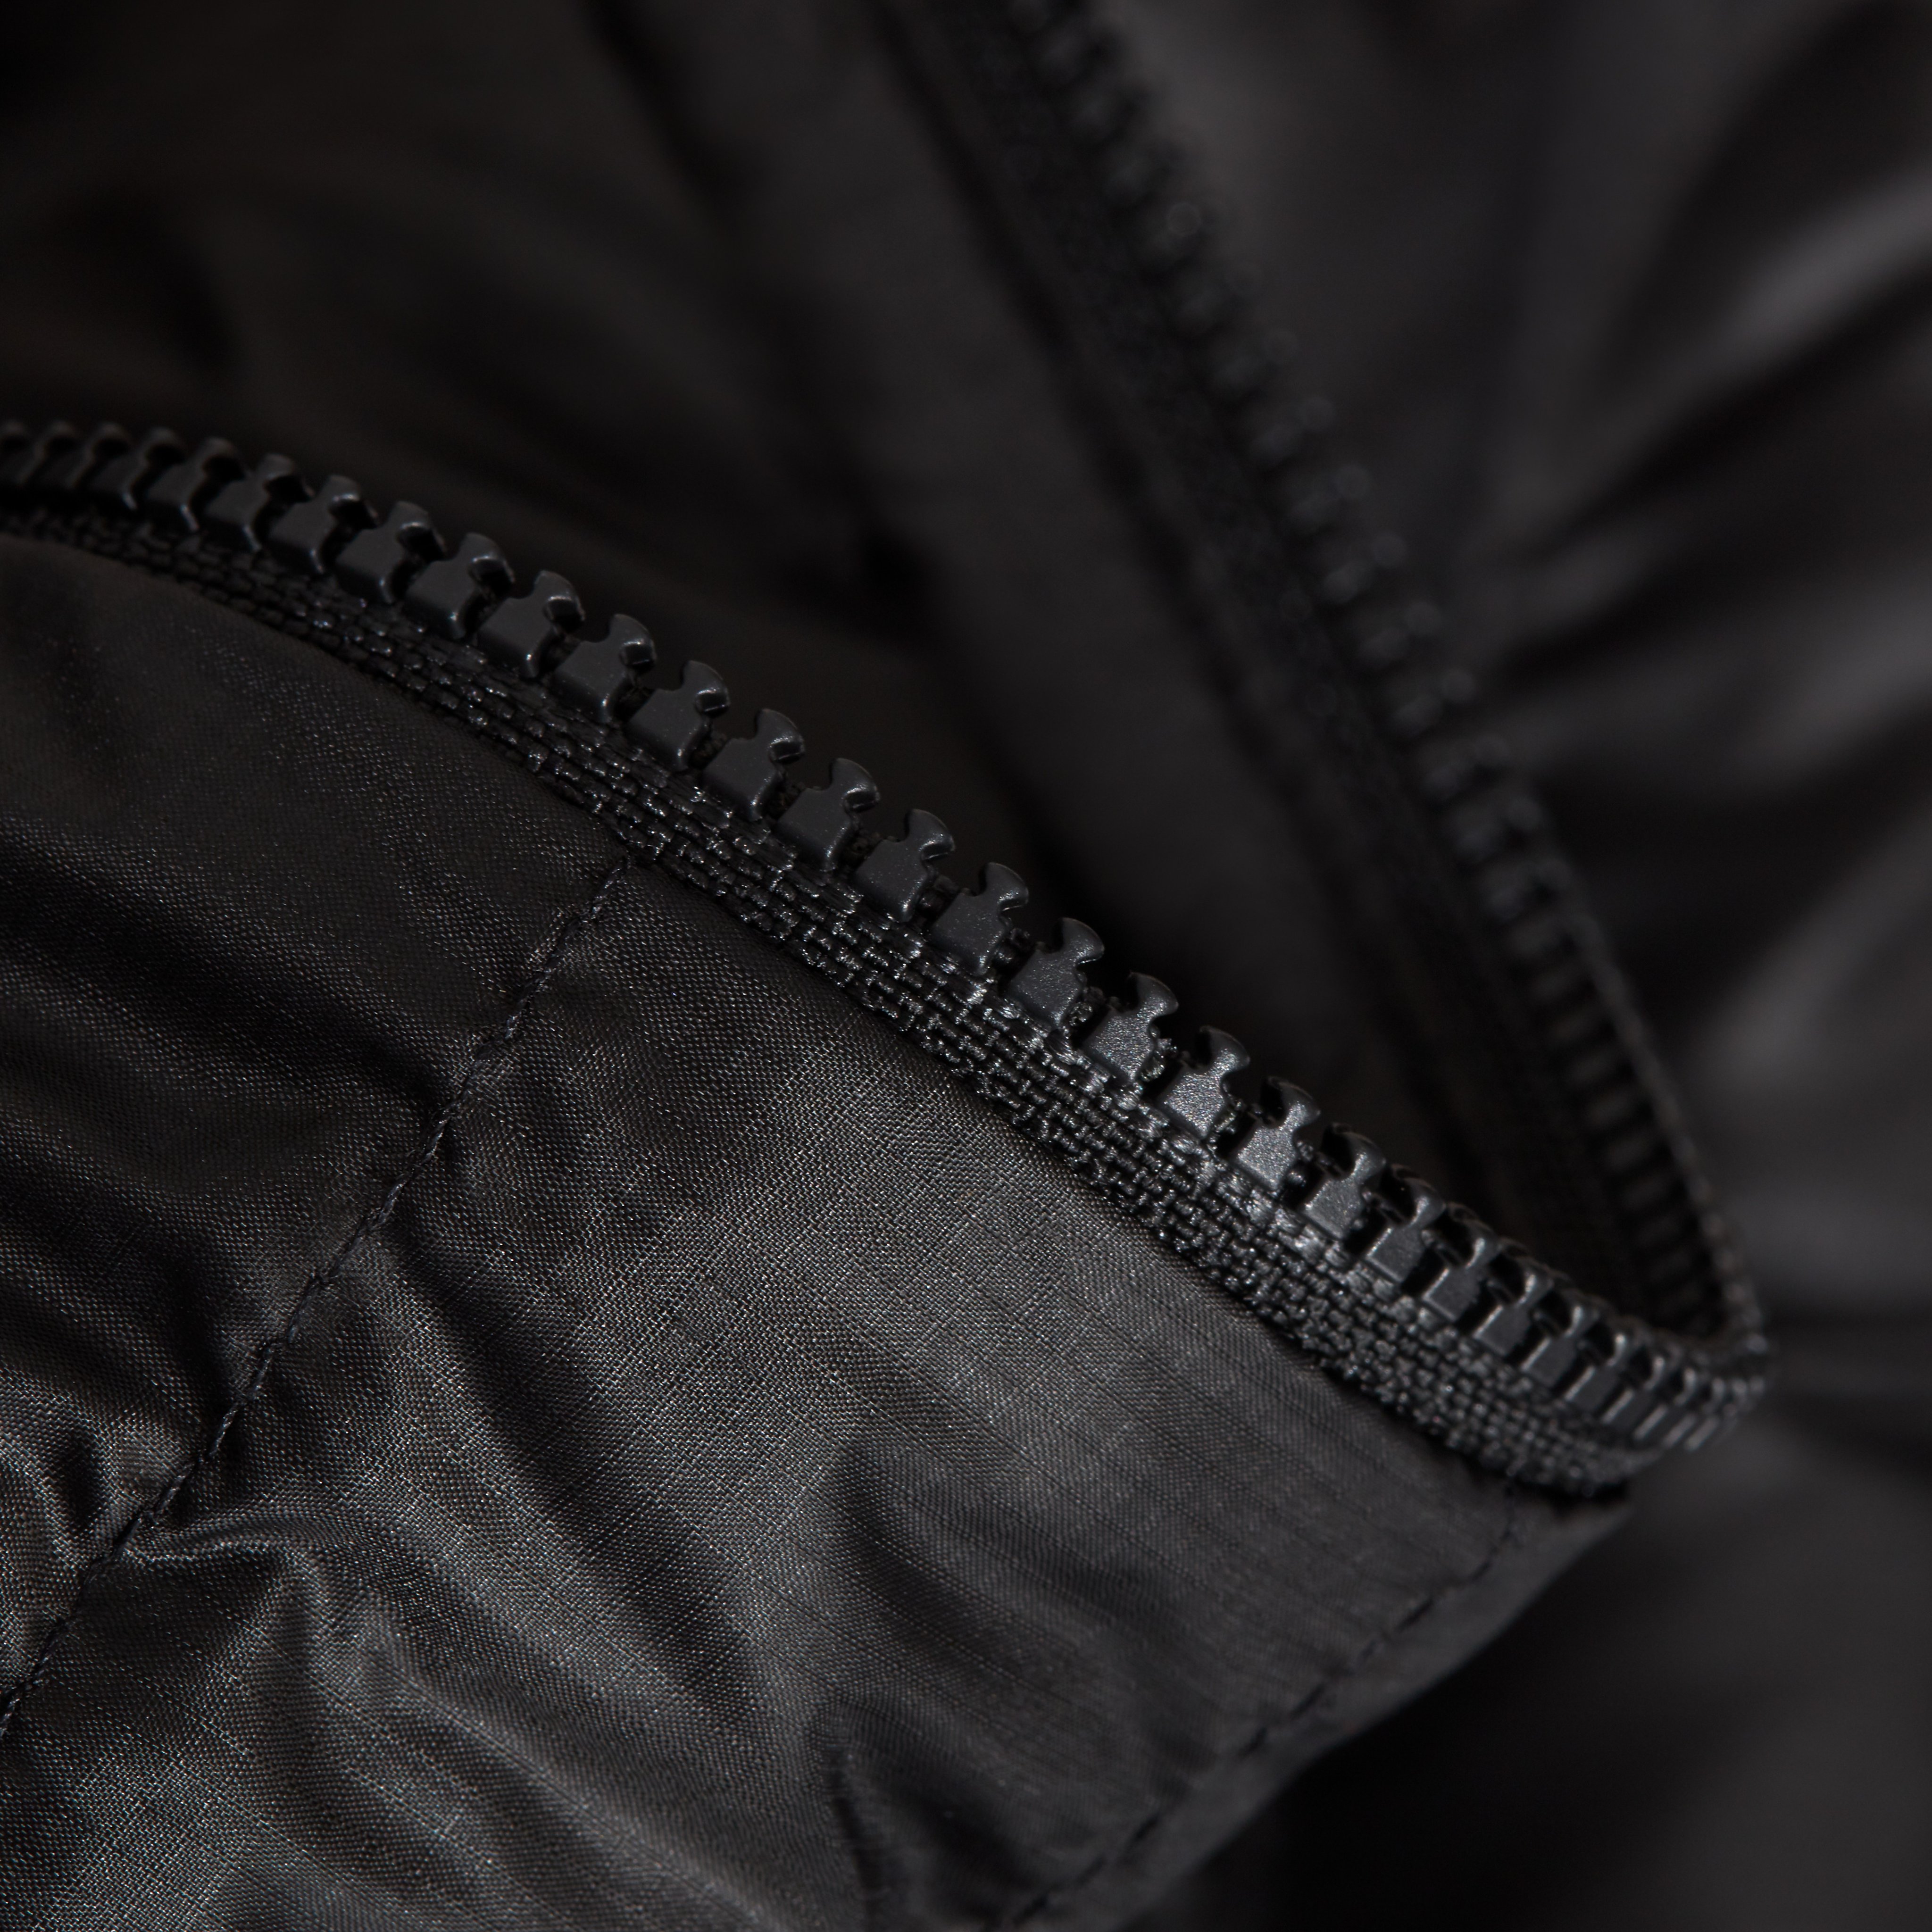 Albula IN Hooded Jacket Women product image